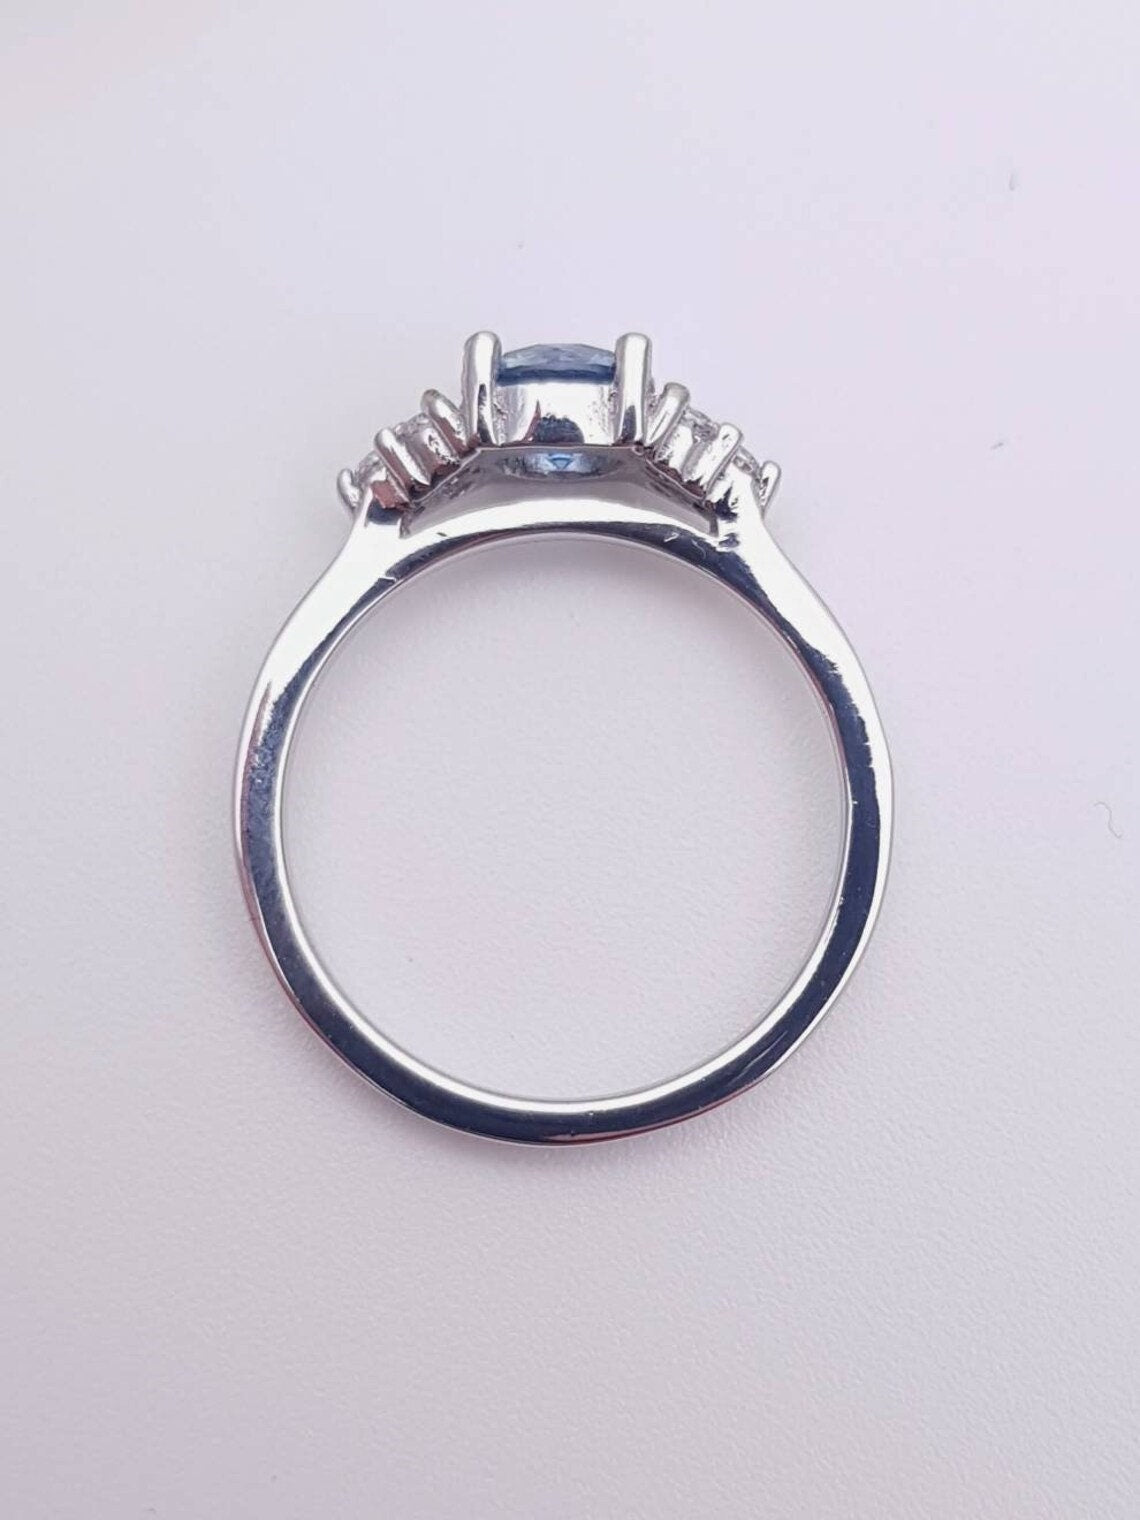 Wedding set! Natural Aquamarine engagment ring and matching eternity & Wedding ring in Titanium or White Gold